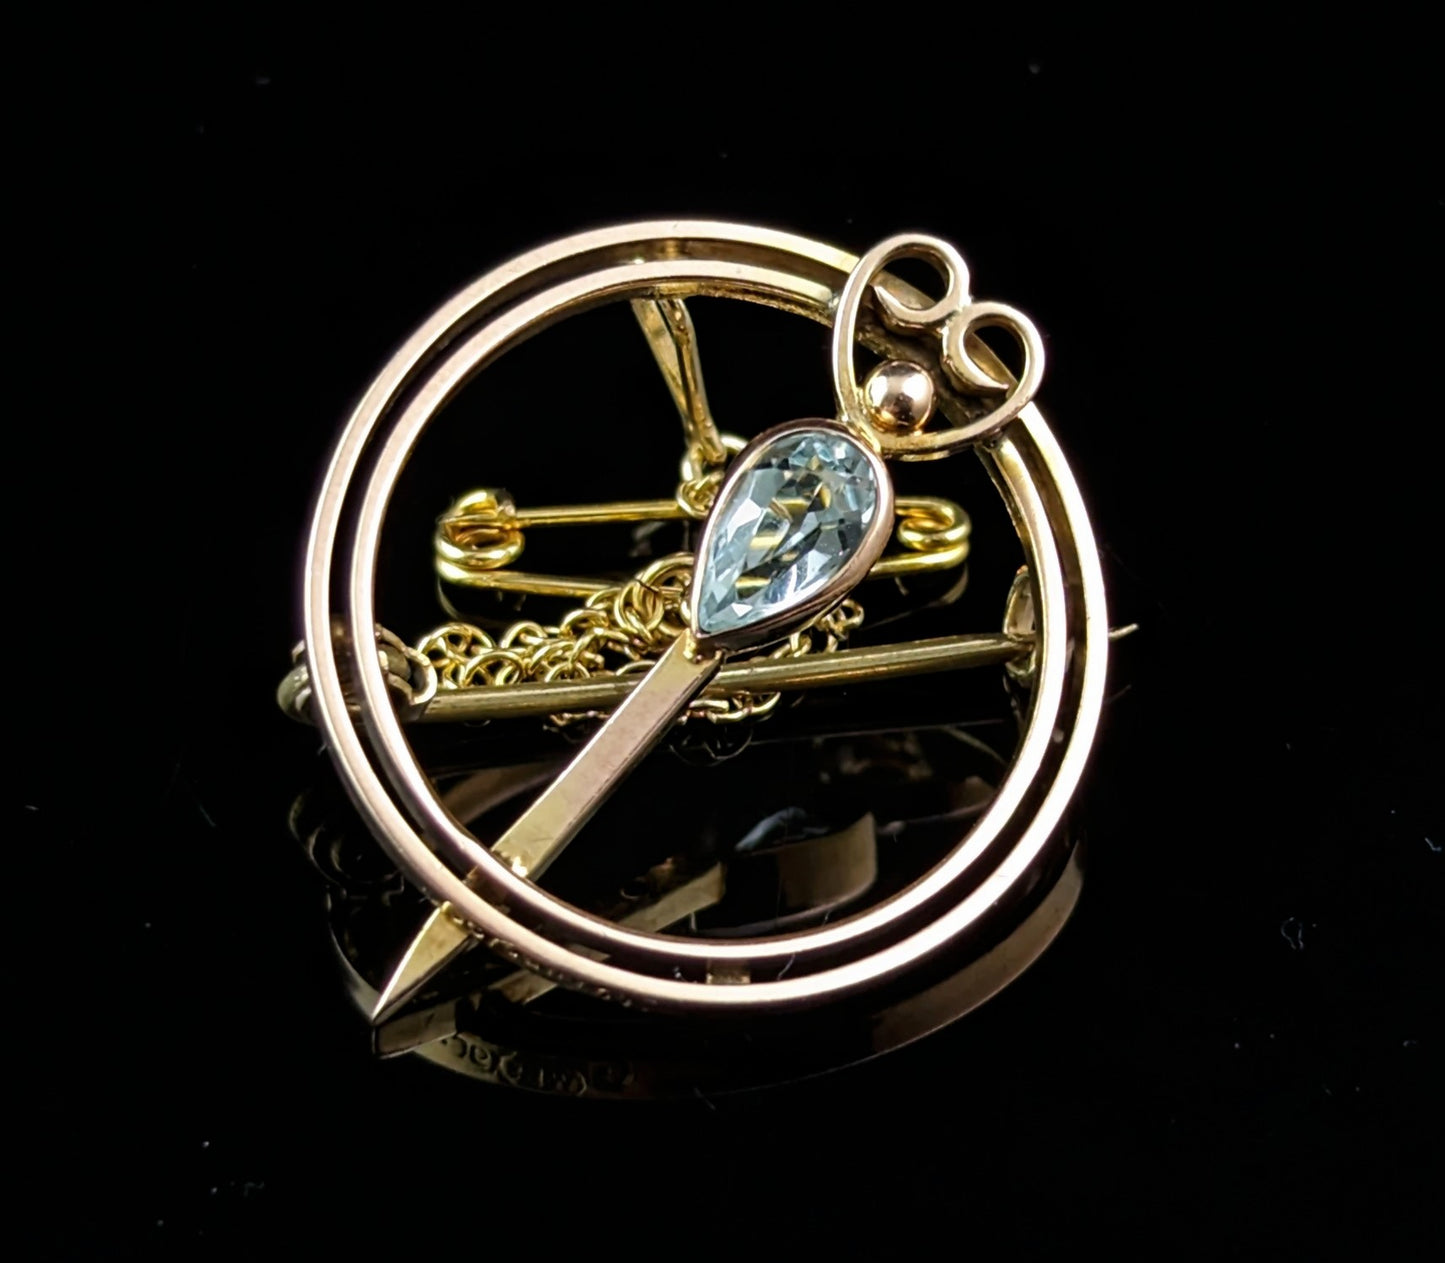 Antique Tara brooch, Irish Celtic revival, 9ct gold and paste, Art Nouveau